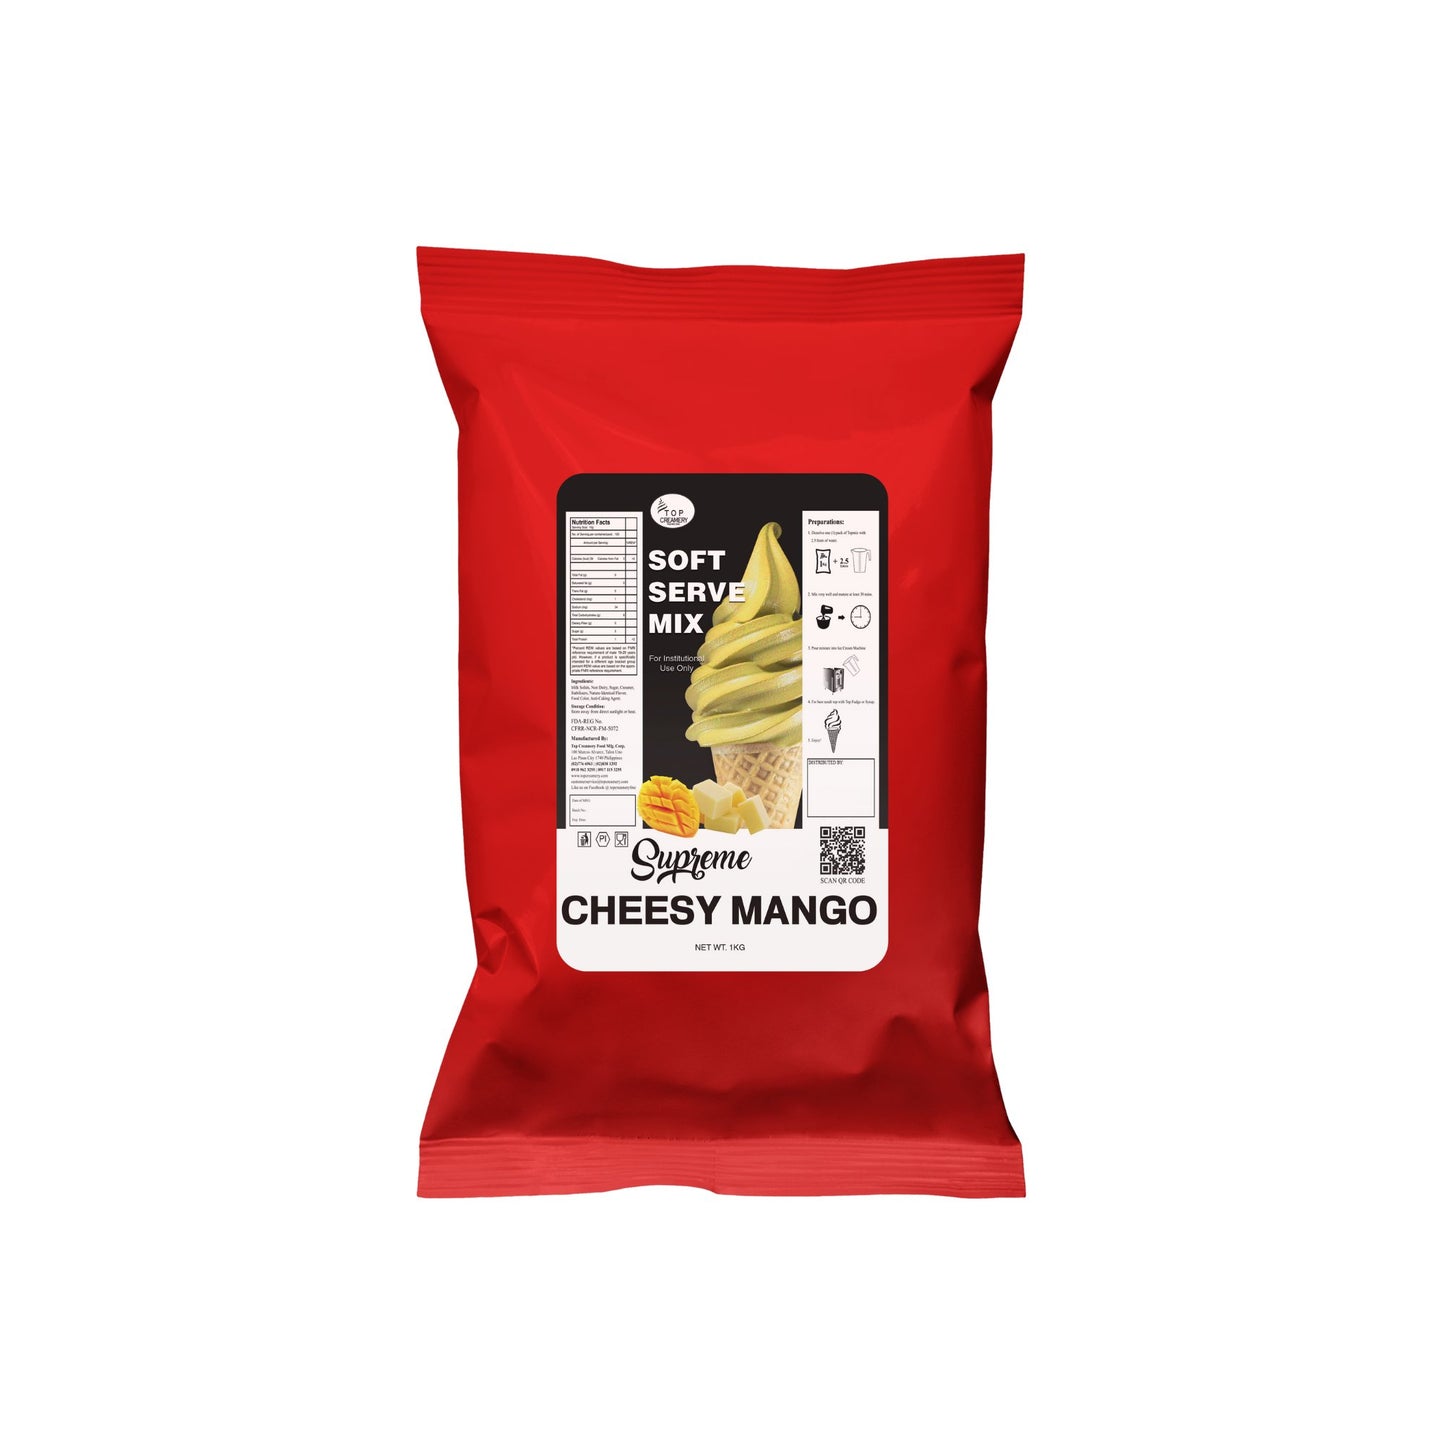 TOP Creamery Supreme Cheesy Mango Soft Serve Ice Cream Powder Premix 1kg - Kreme City Supplies